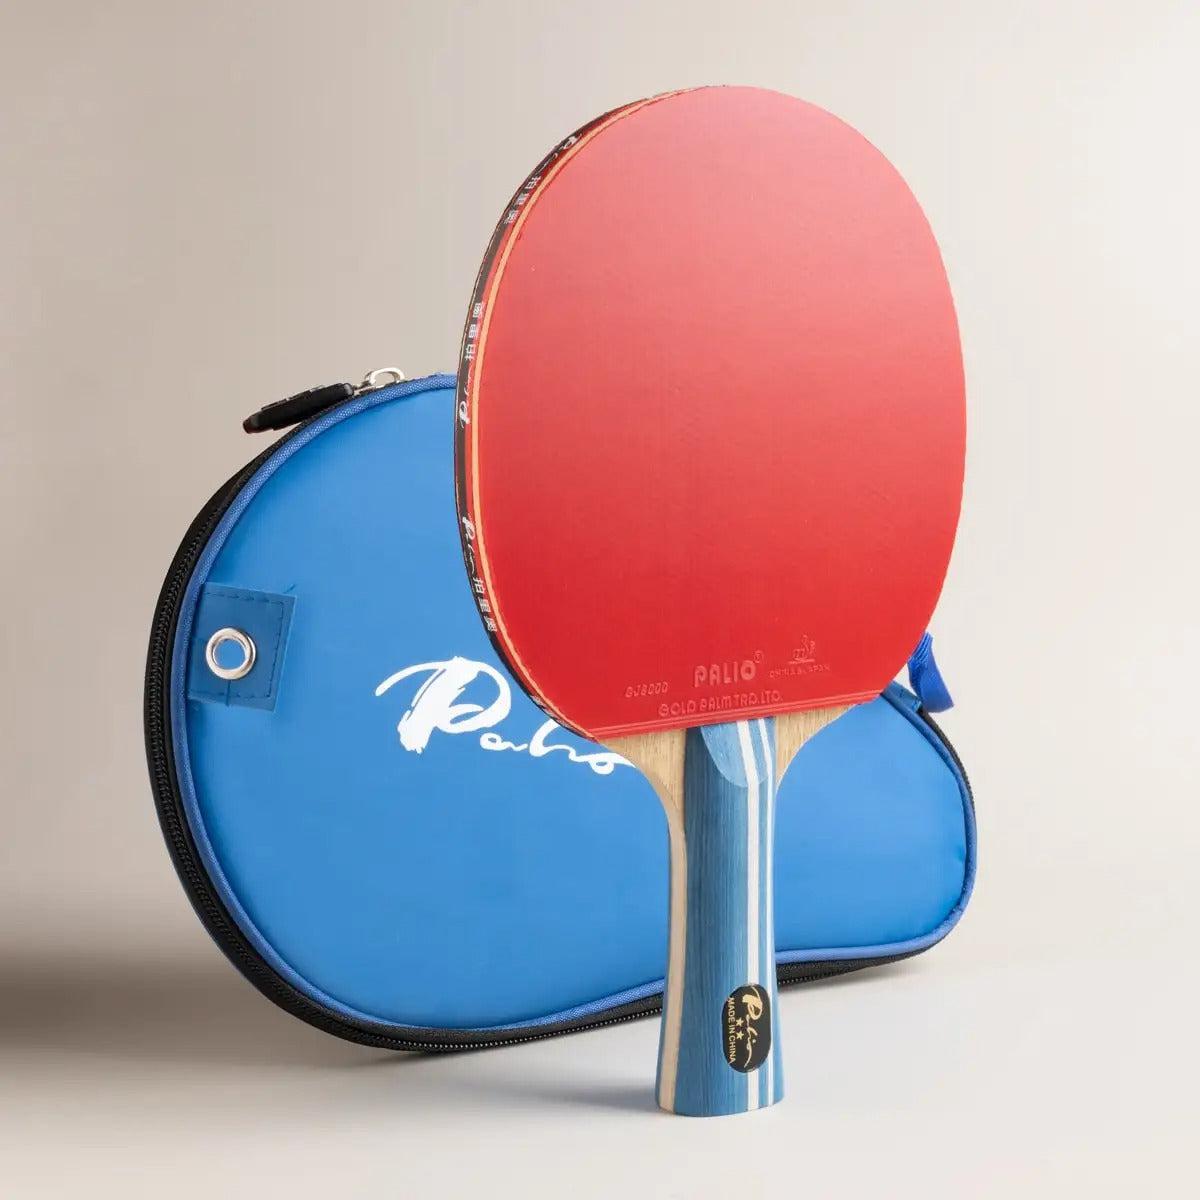 Palio 2 Star Expert Table Tennis Bat + Case